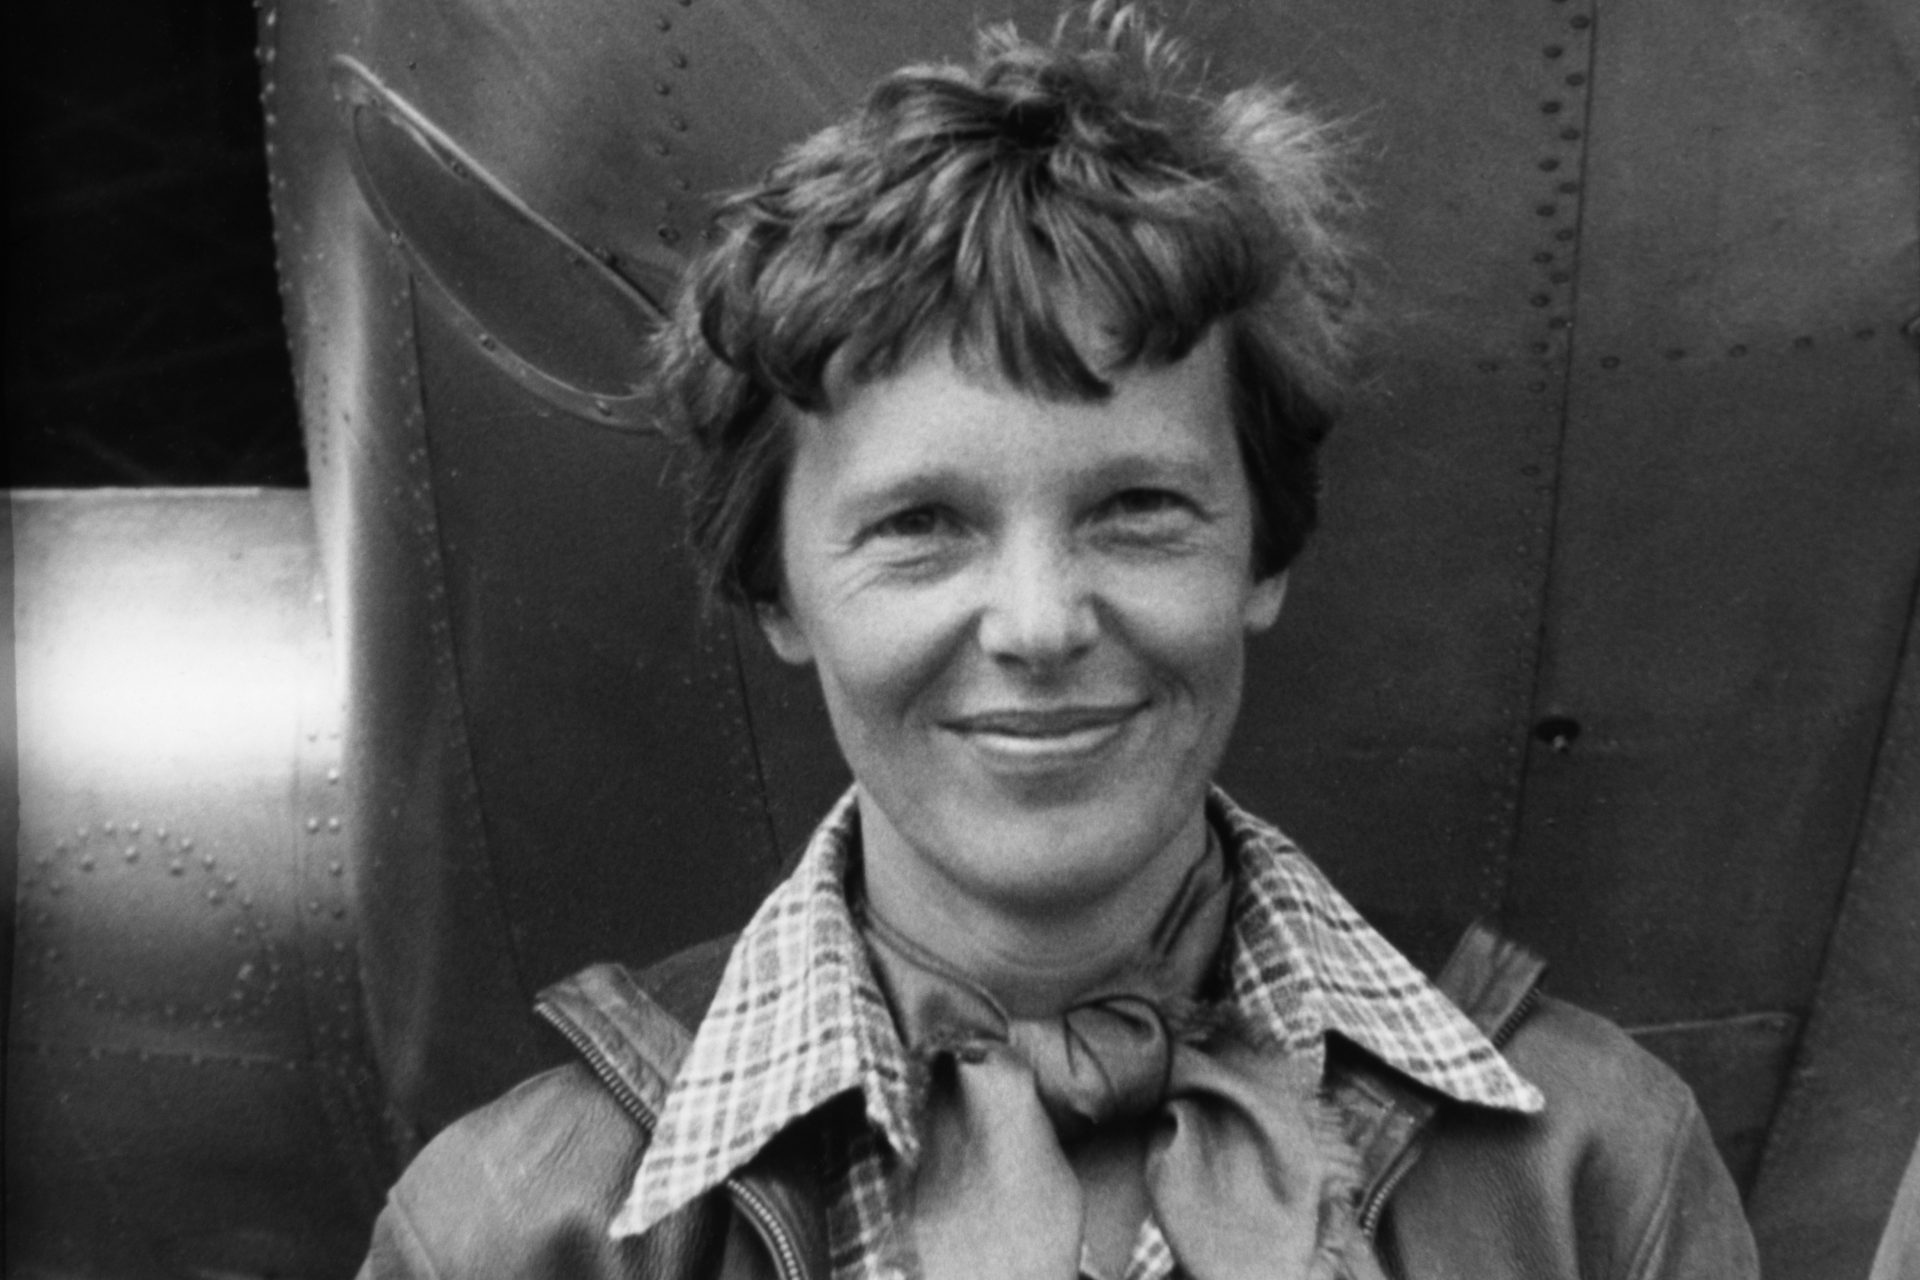 Has Amelia Earhart's plane been found?